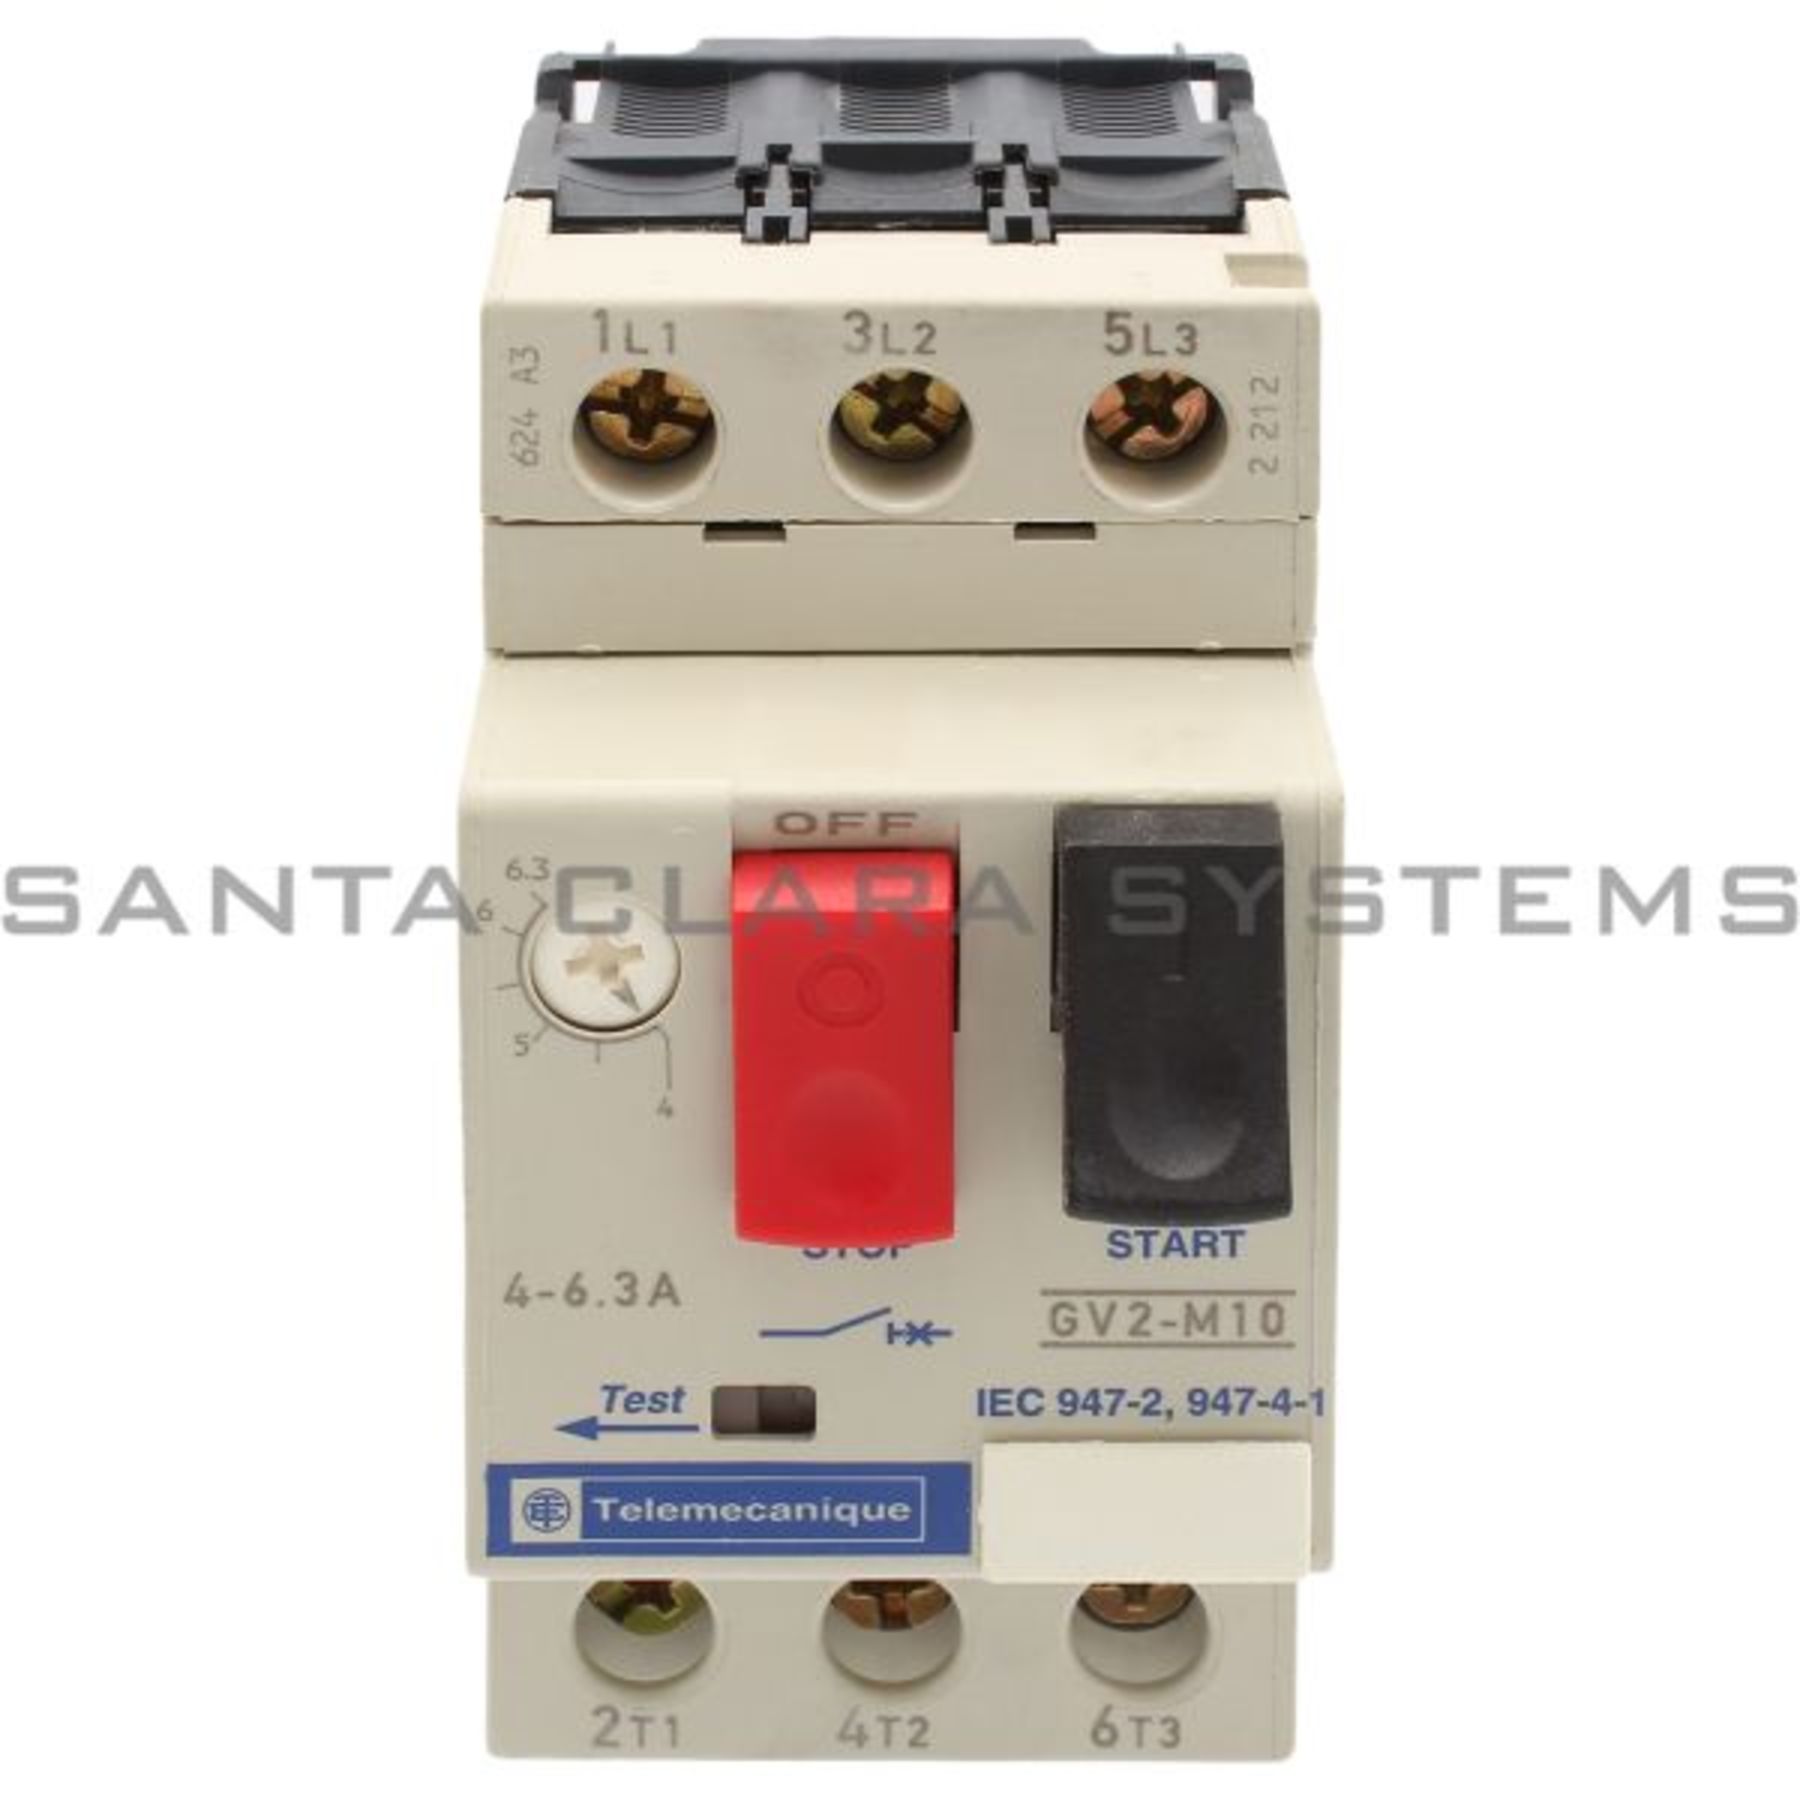 Telemecanique GV2M10 Industrial Control System for sale online 